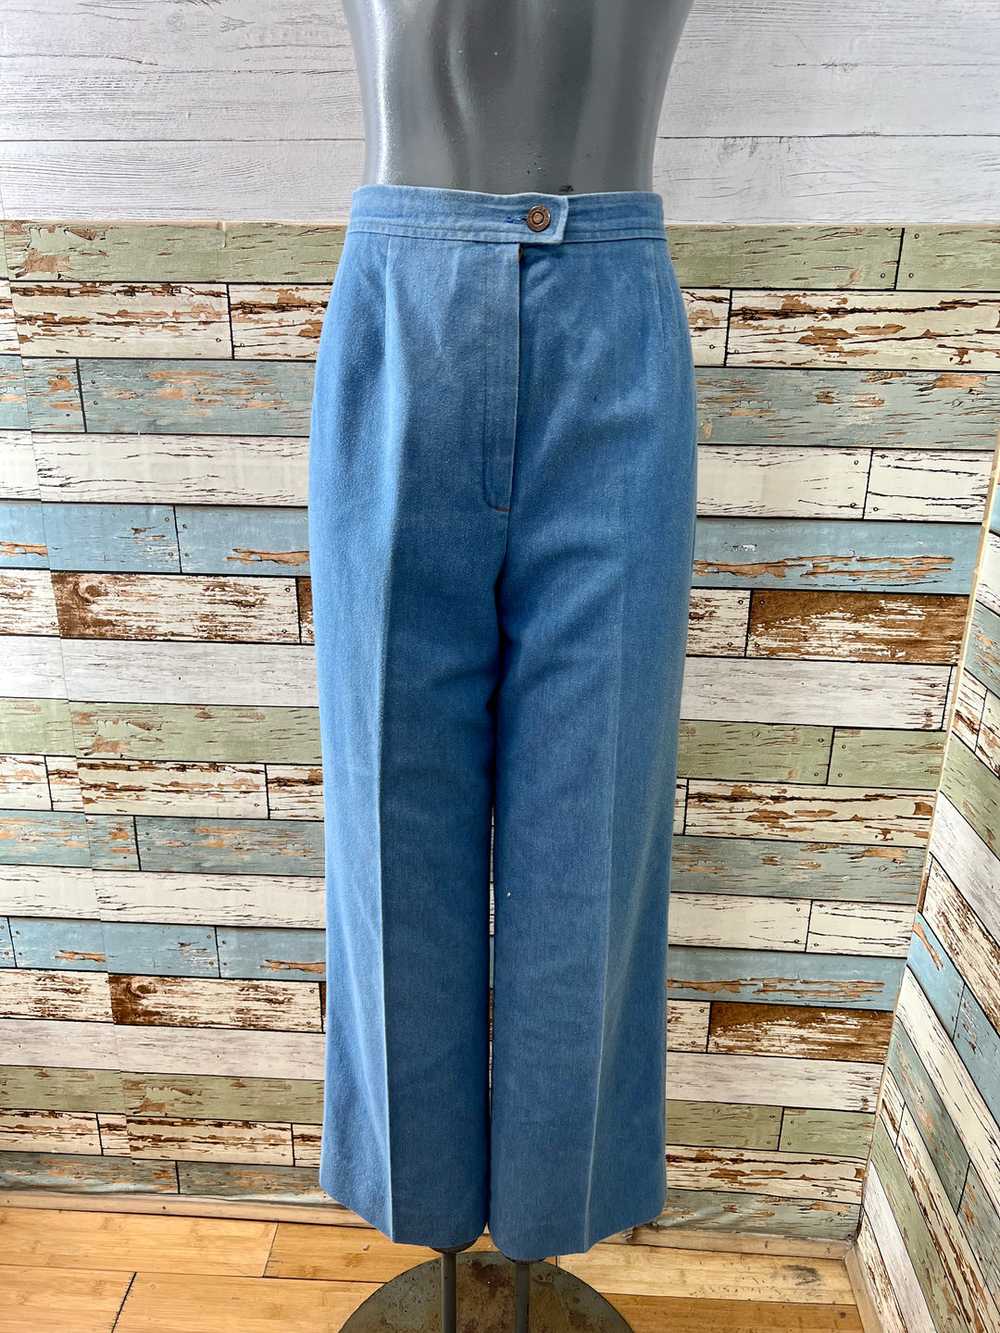 80’s Light Blue Denim Slacks Style Pants - image 1